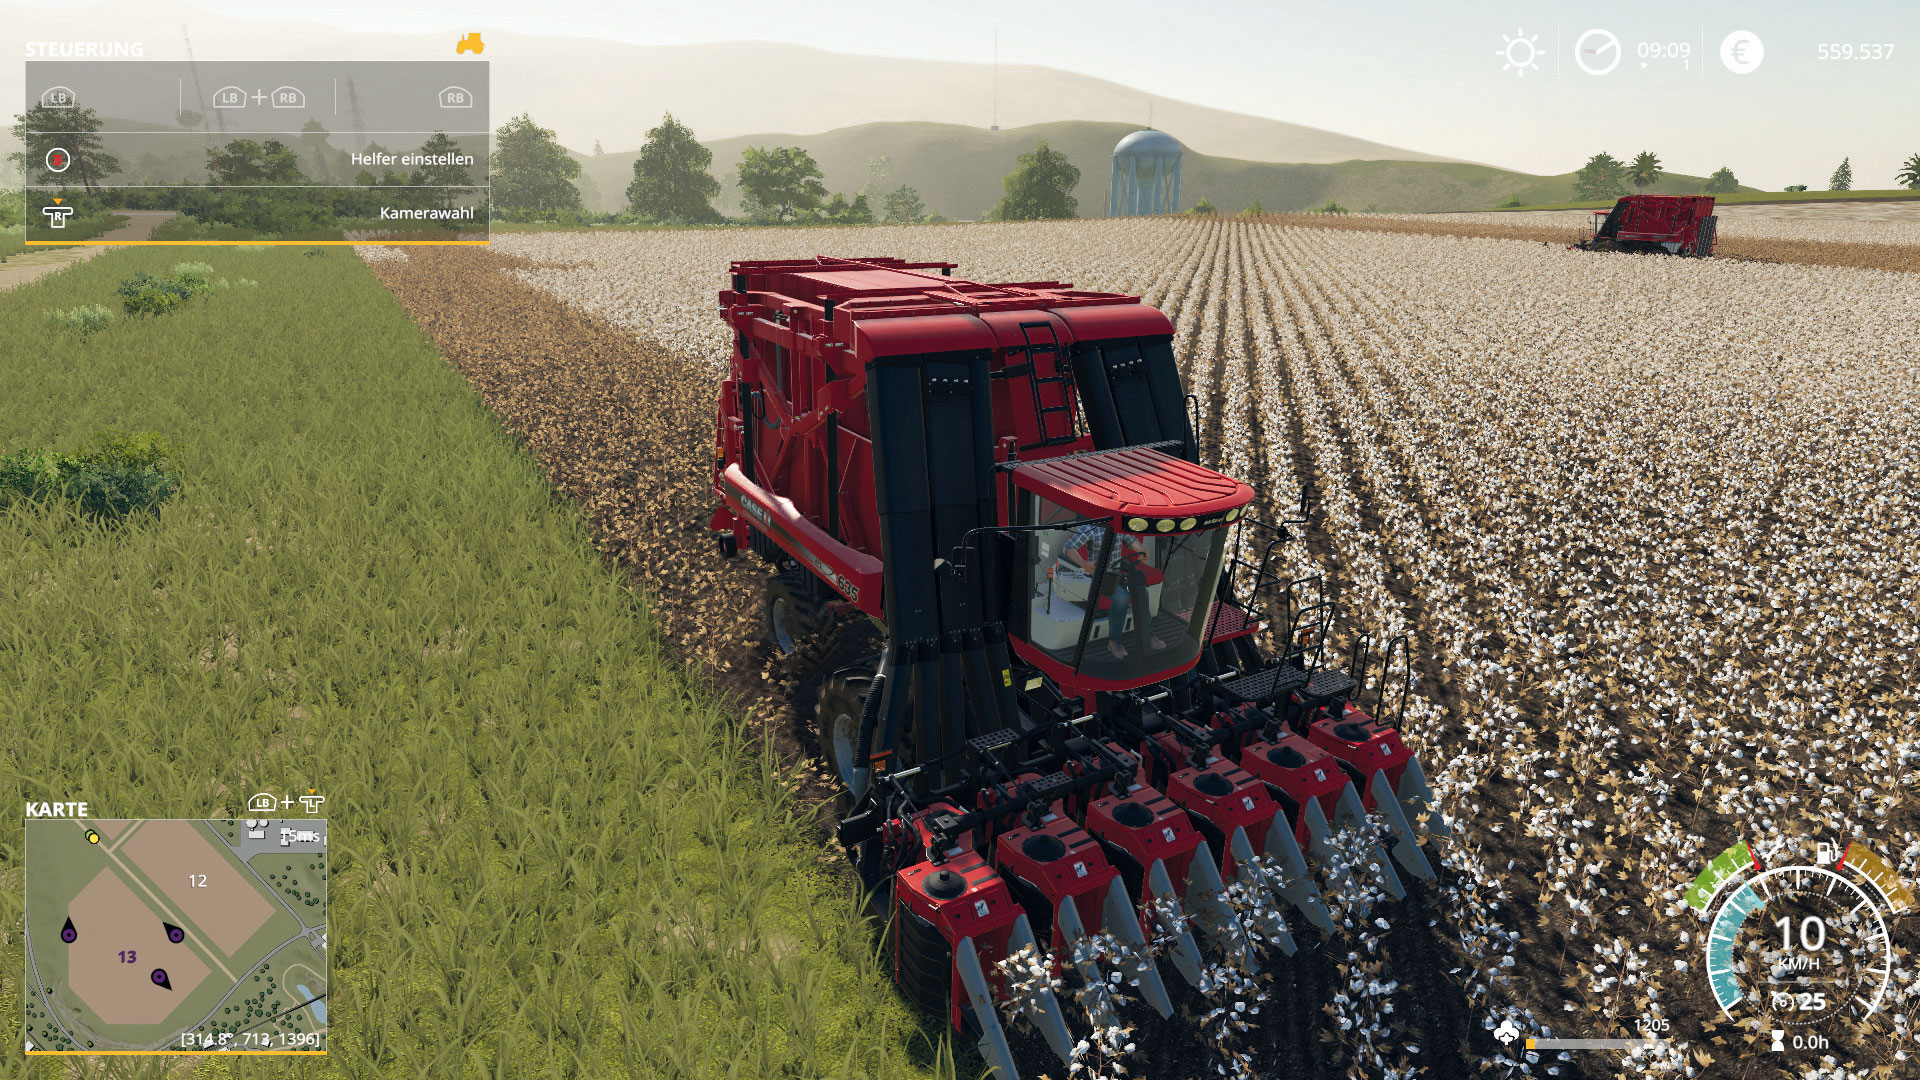 logitech g29 ps4 farming simulator 19